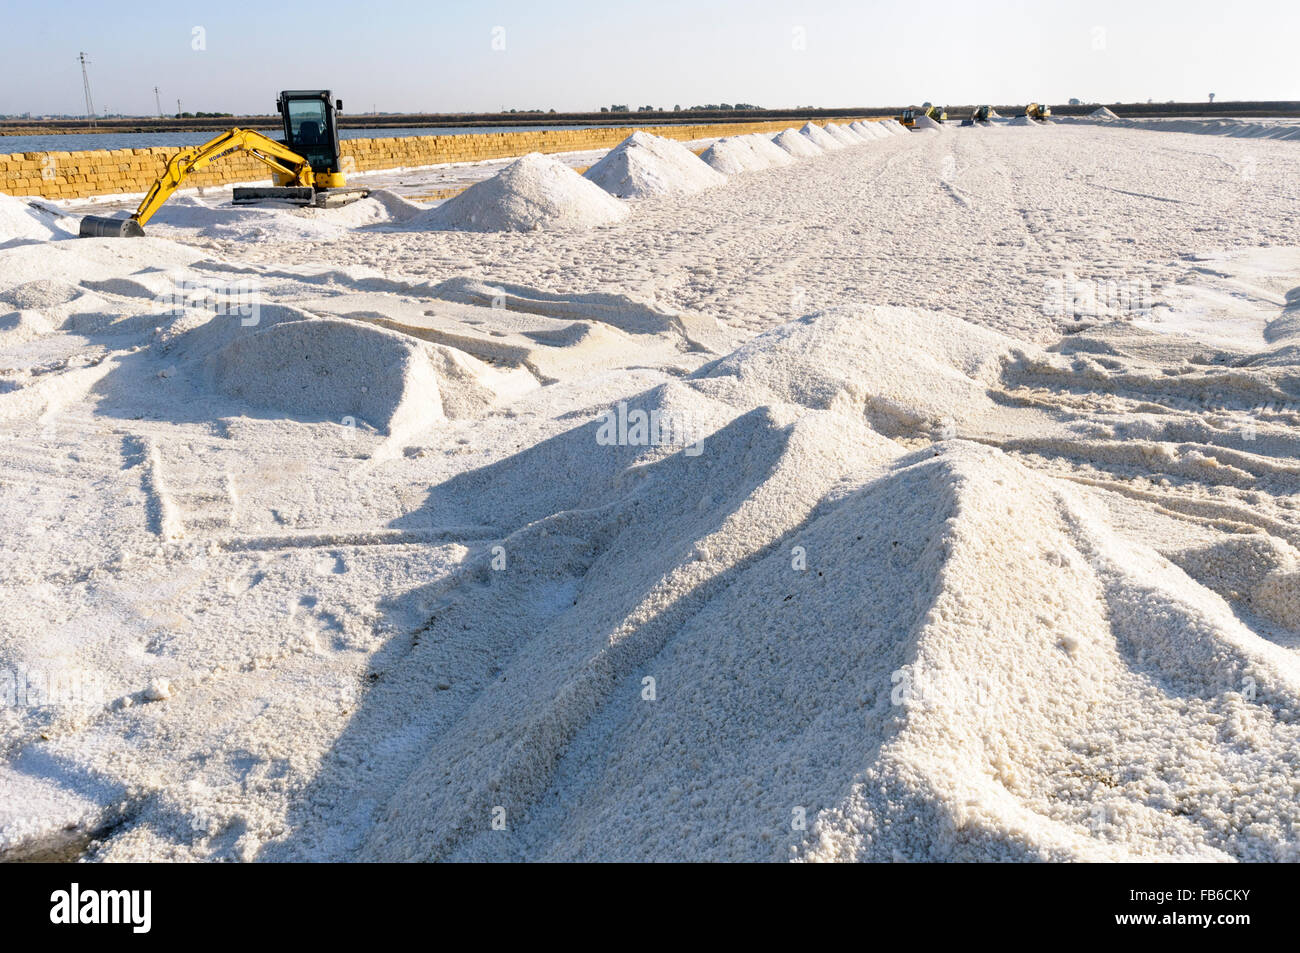 taly, Sicily, Trapani. A Komatsu crawler excavator harvesting sea salt from a evaporation pond. Stock Photo